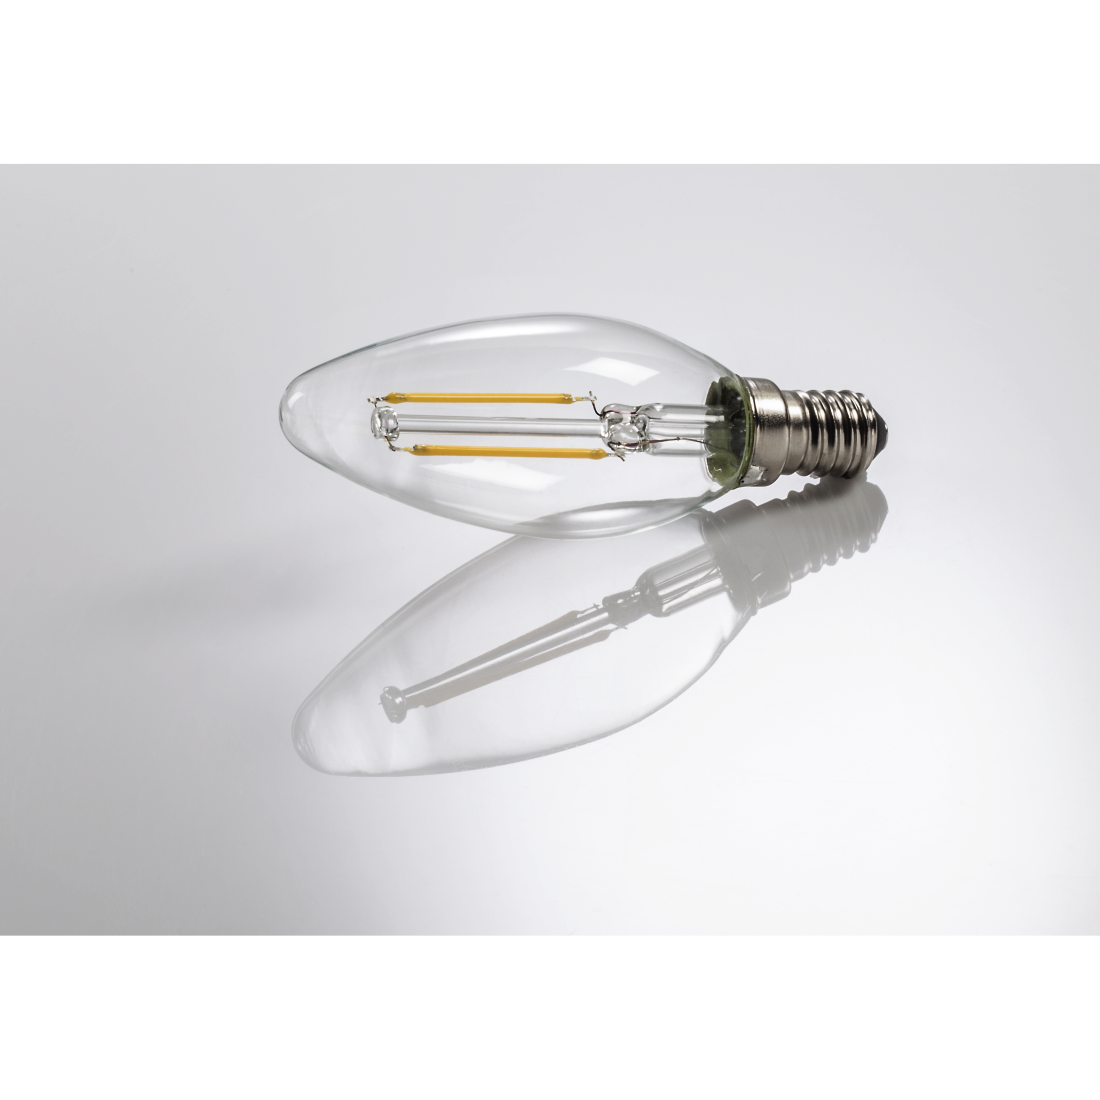 abx3 Druckfähige Abbildung 3 - Xavax, LED-Filament, E14, 250lm ersetzt 25W, Kerzenlampe, Warmweiß